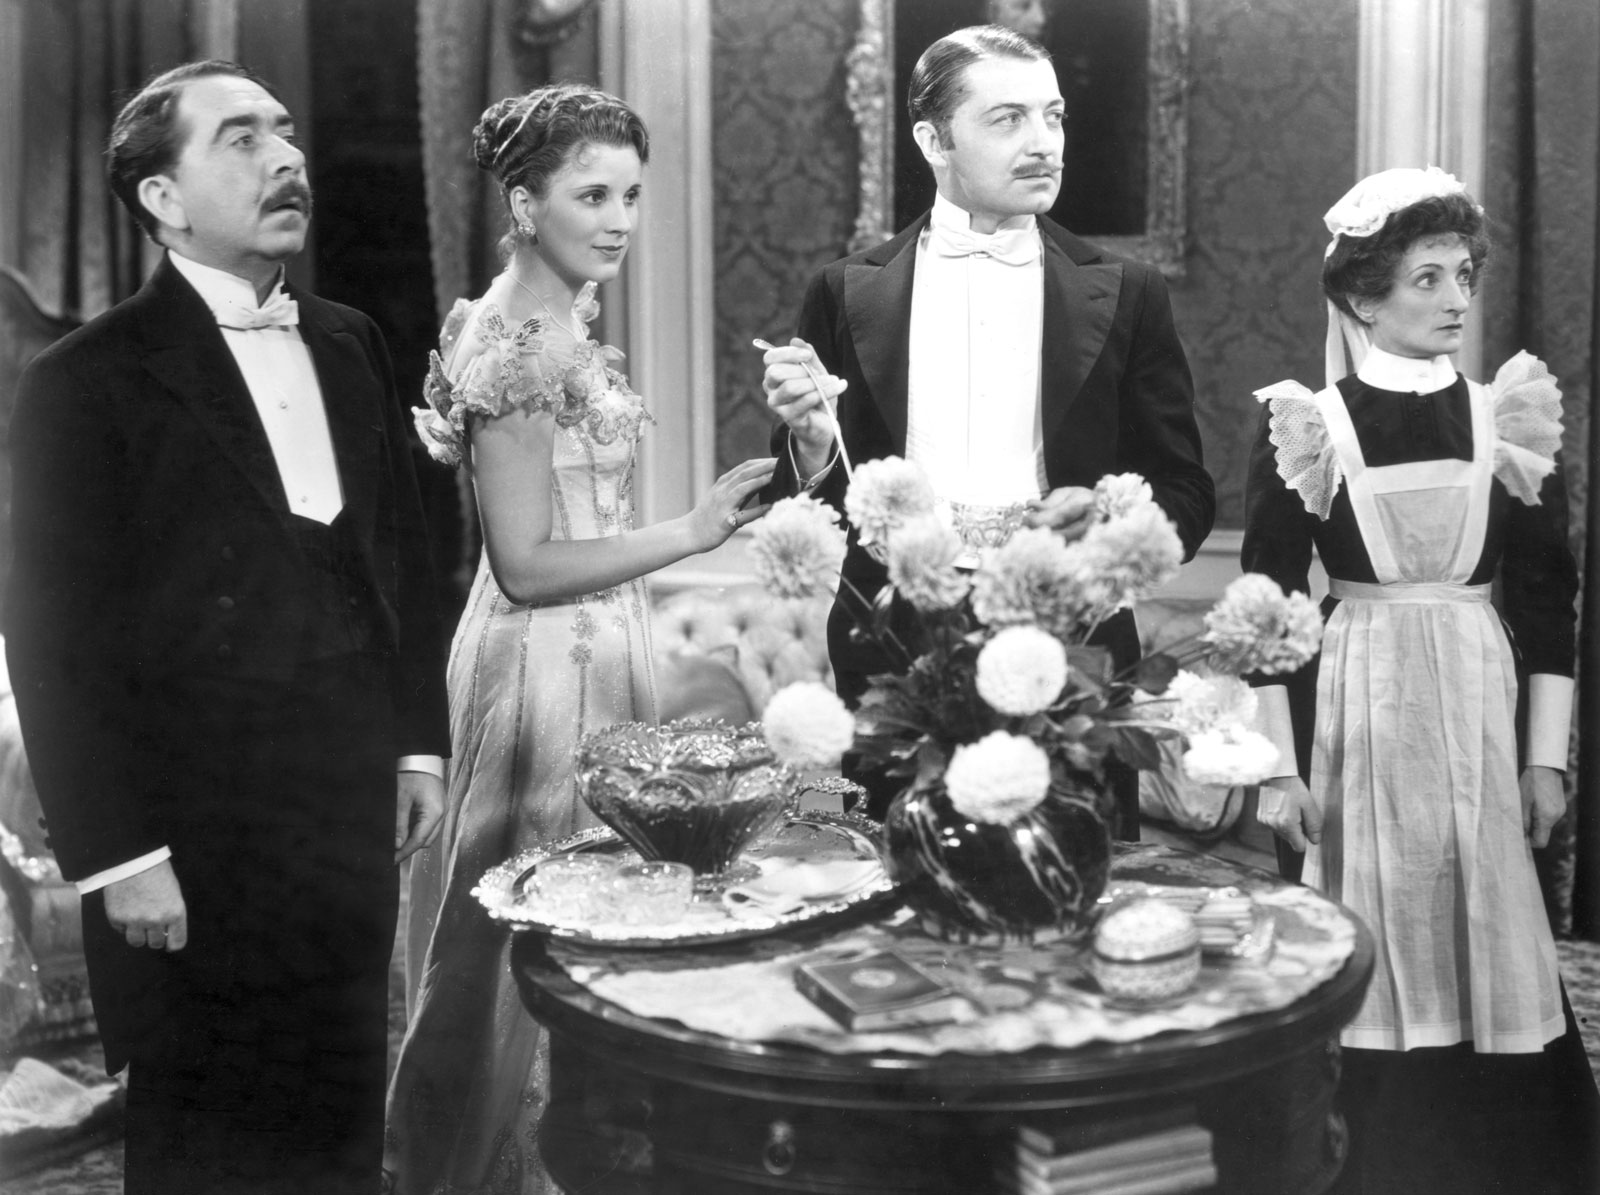 from left to right: Herbert Mundin as “Alfred Bridges”, Diana Wynward as “Jane Marryot”, Clive Brook as “Robert Marryot”, and Una OConnor as “Ellen Bridges”